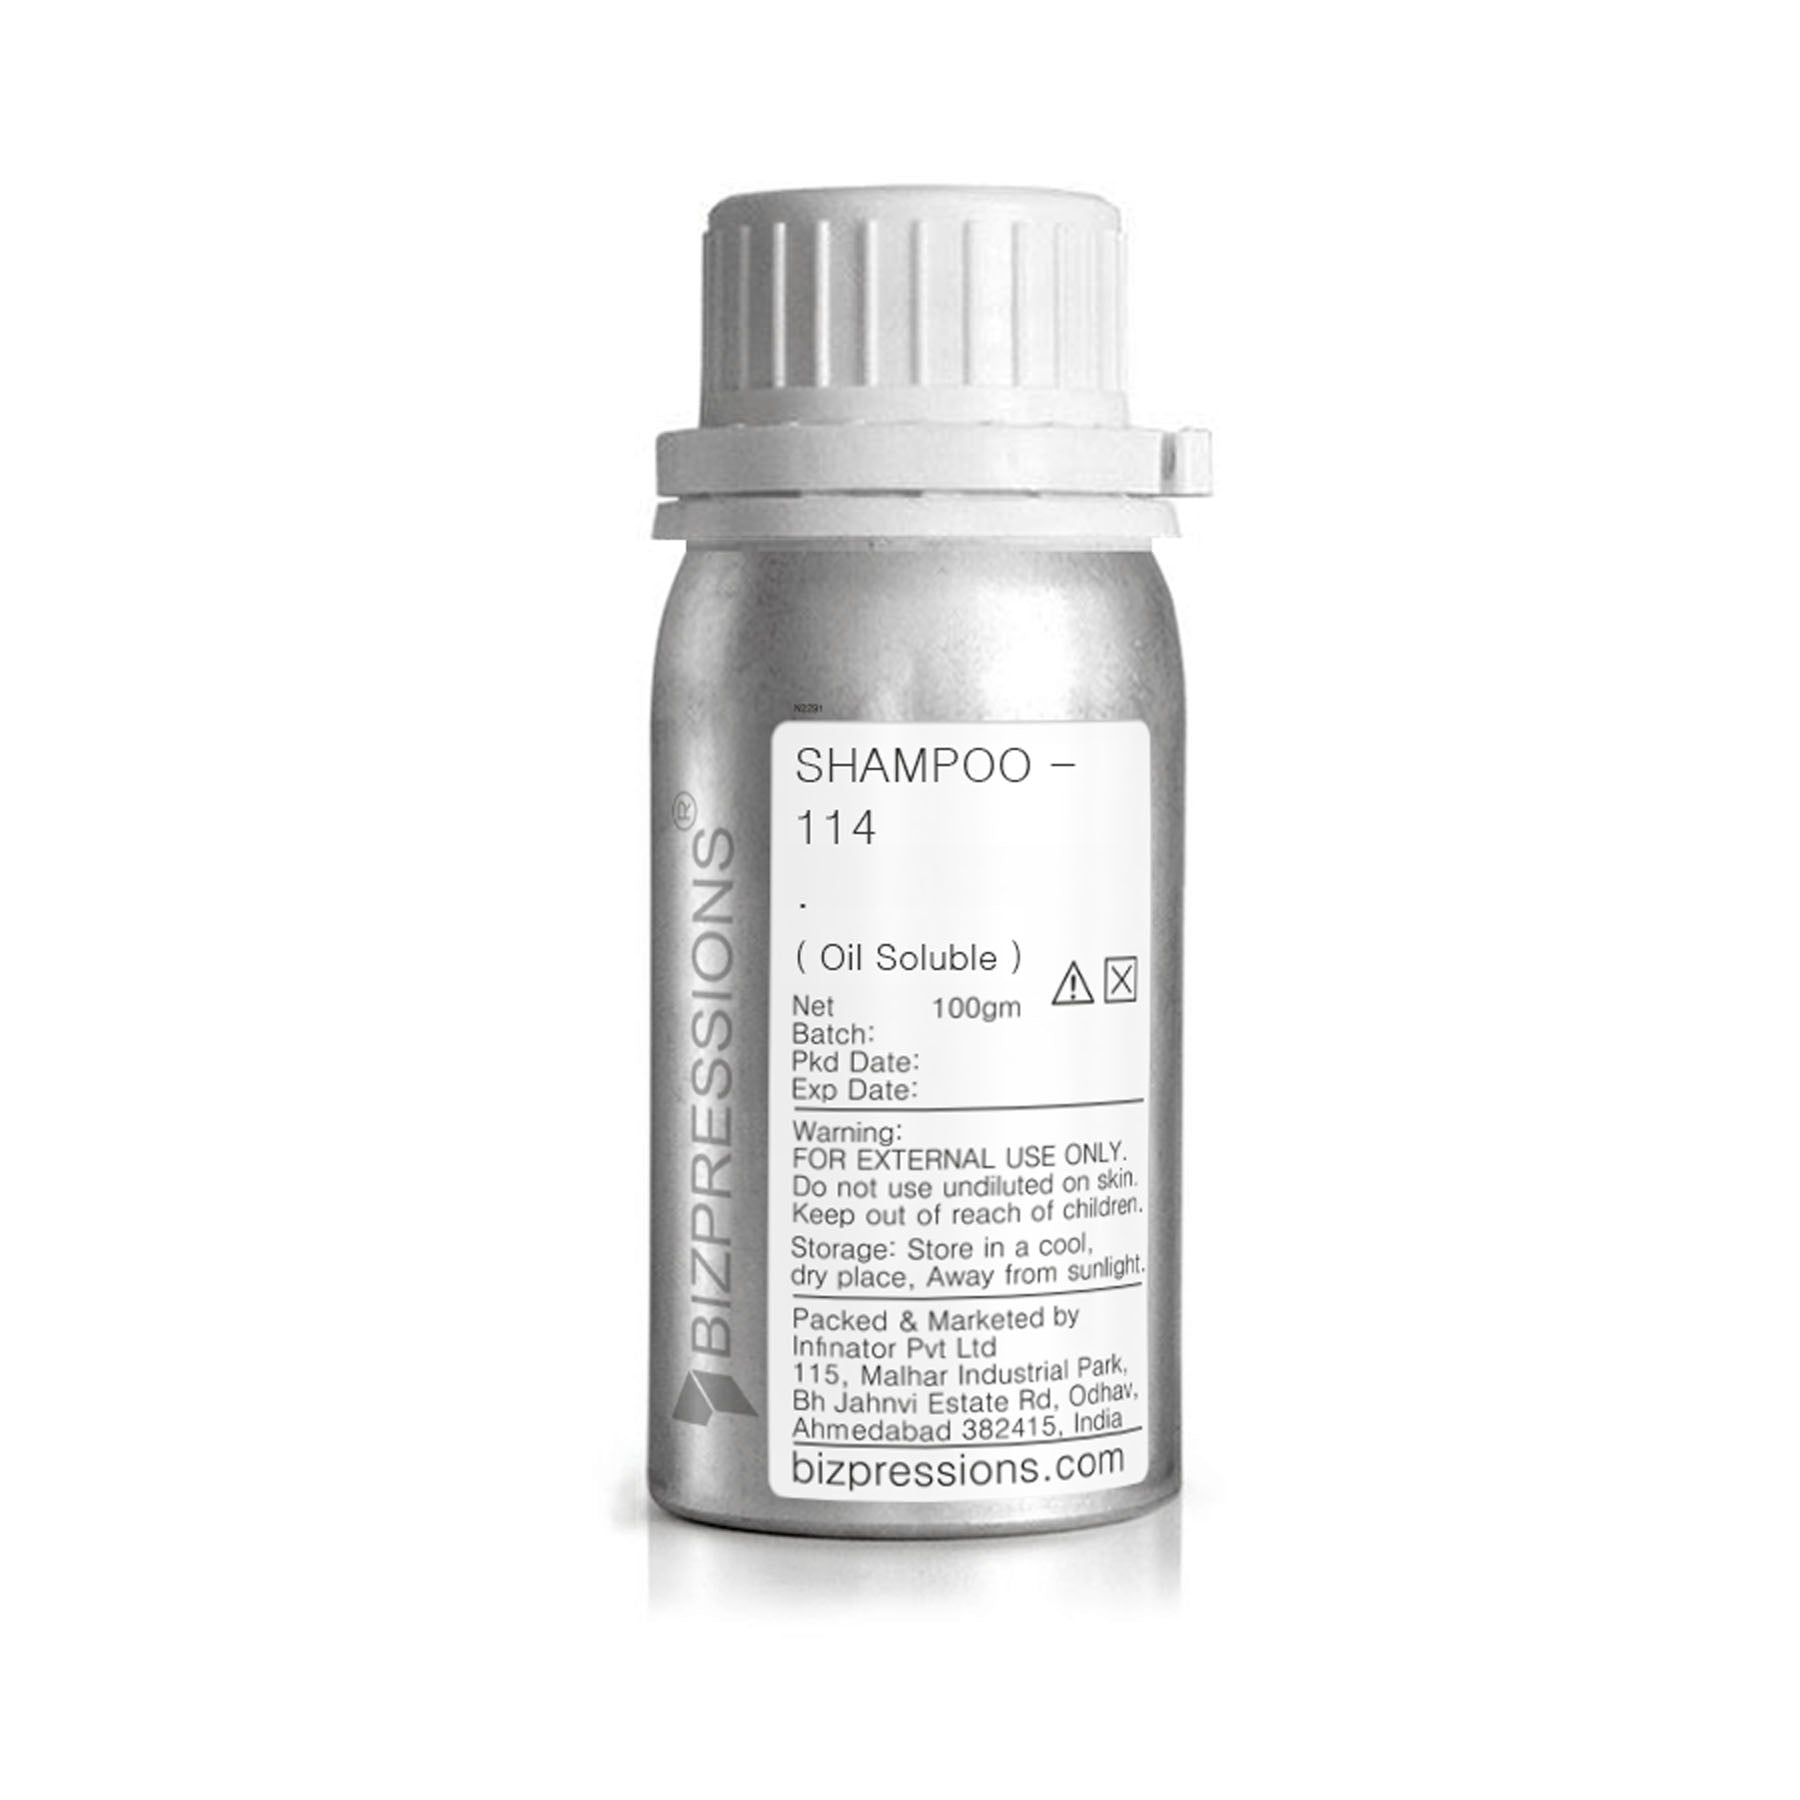 SHAMPOO - 114 - Fragrance ( Oil Soluble ) - 100 gm